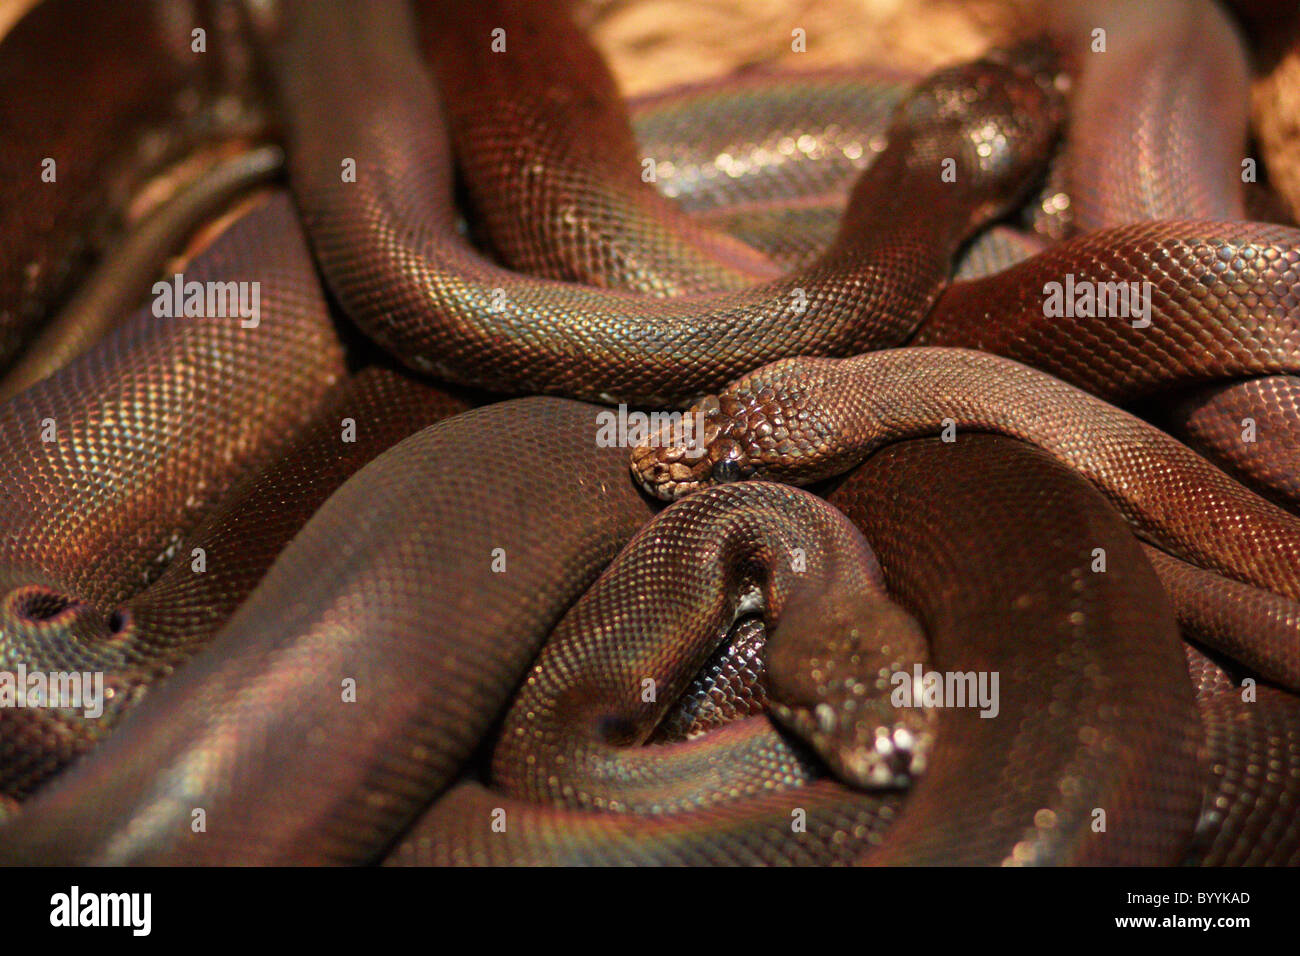 snakes congregating Stock Photo